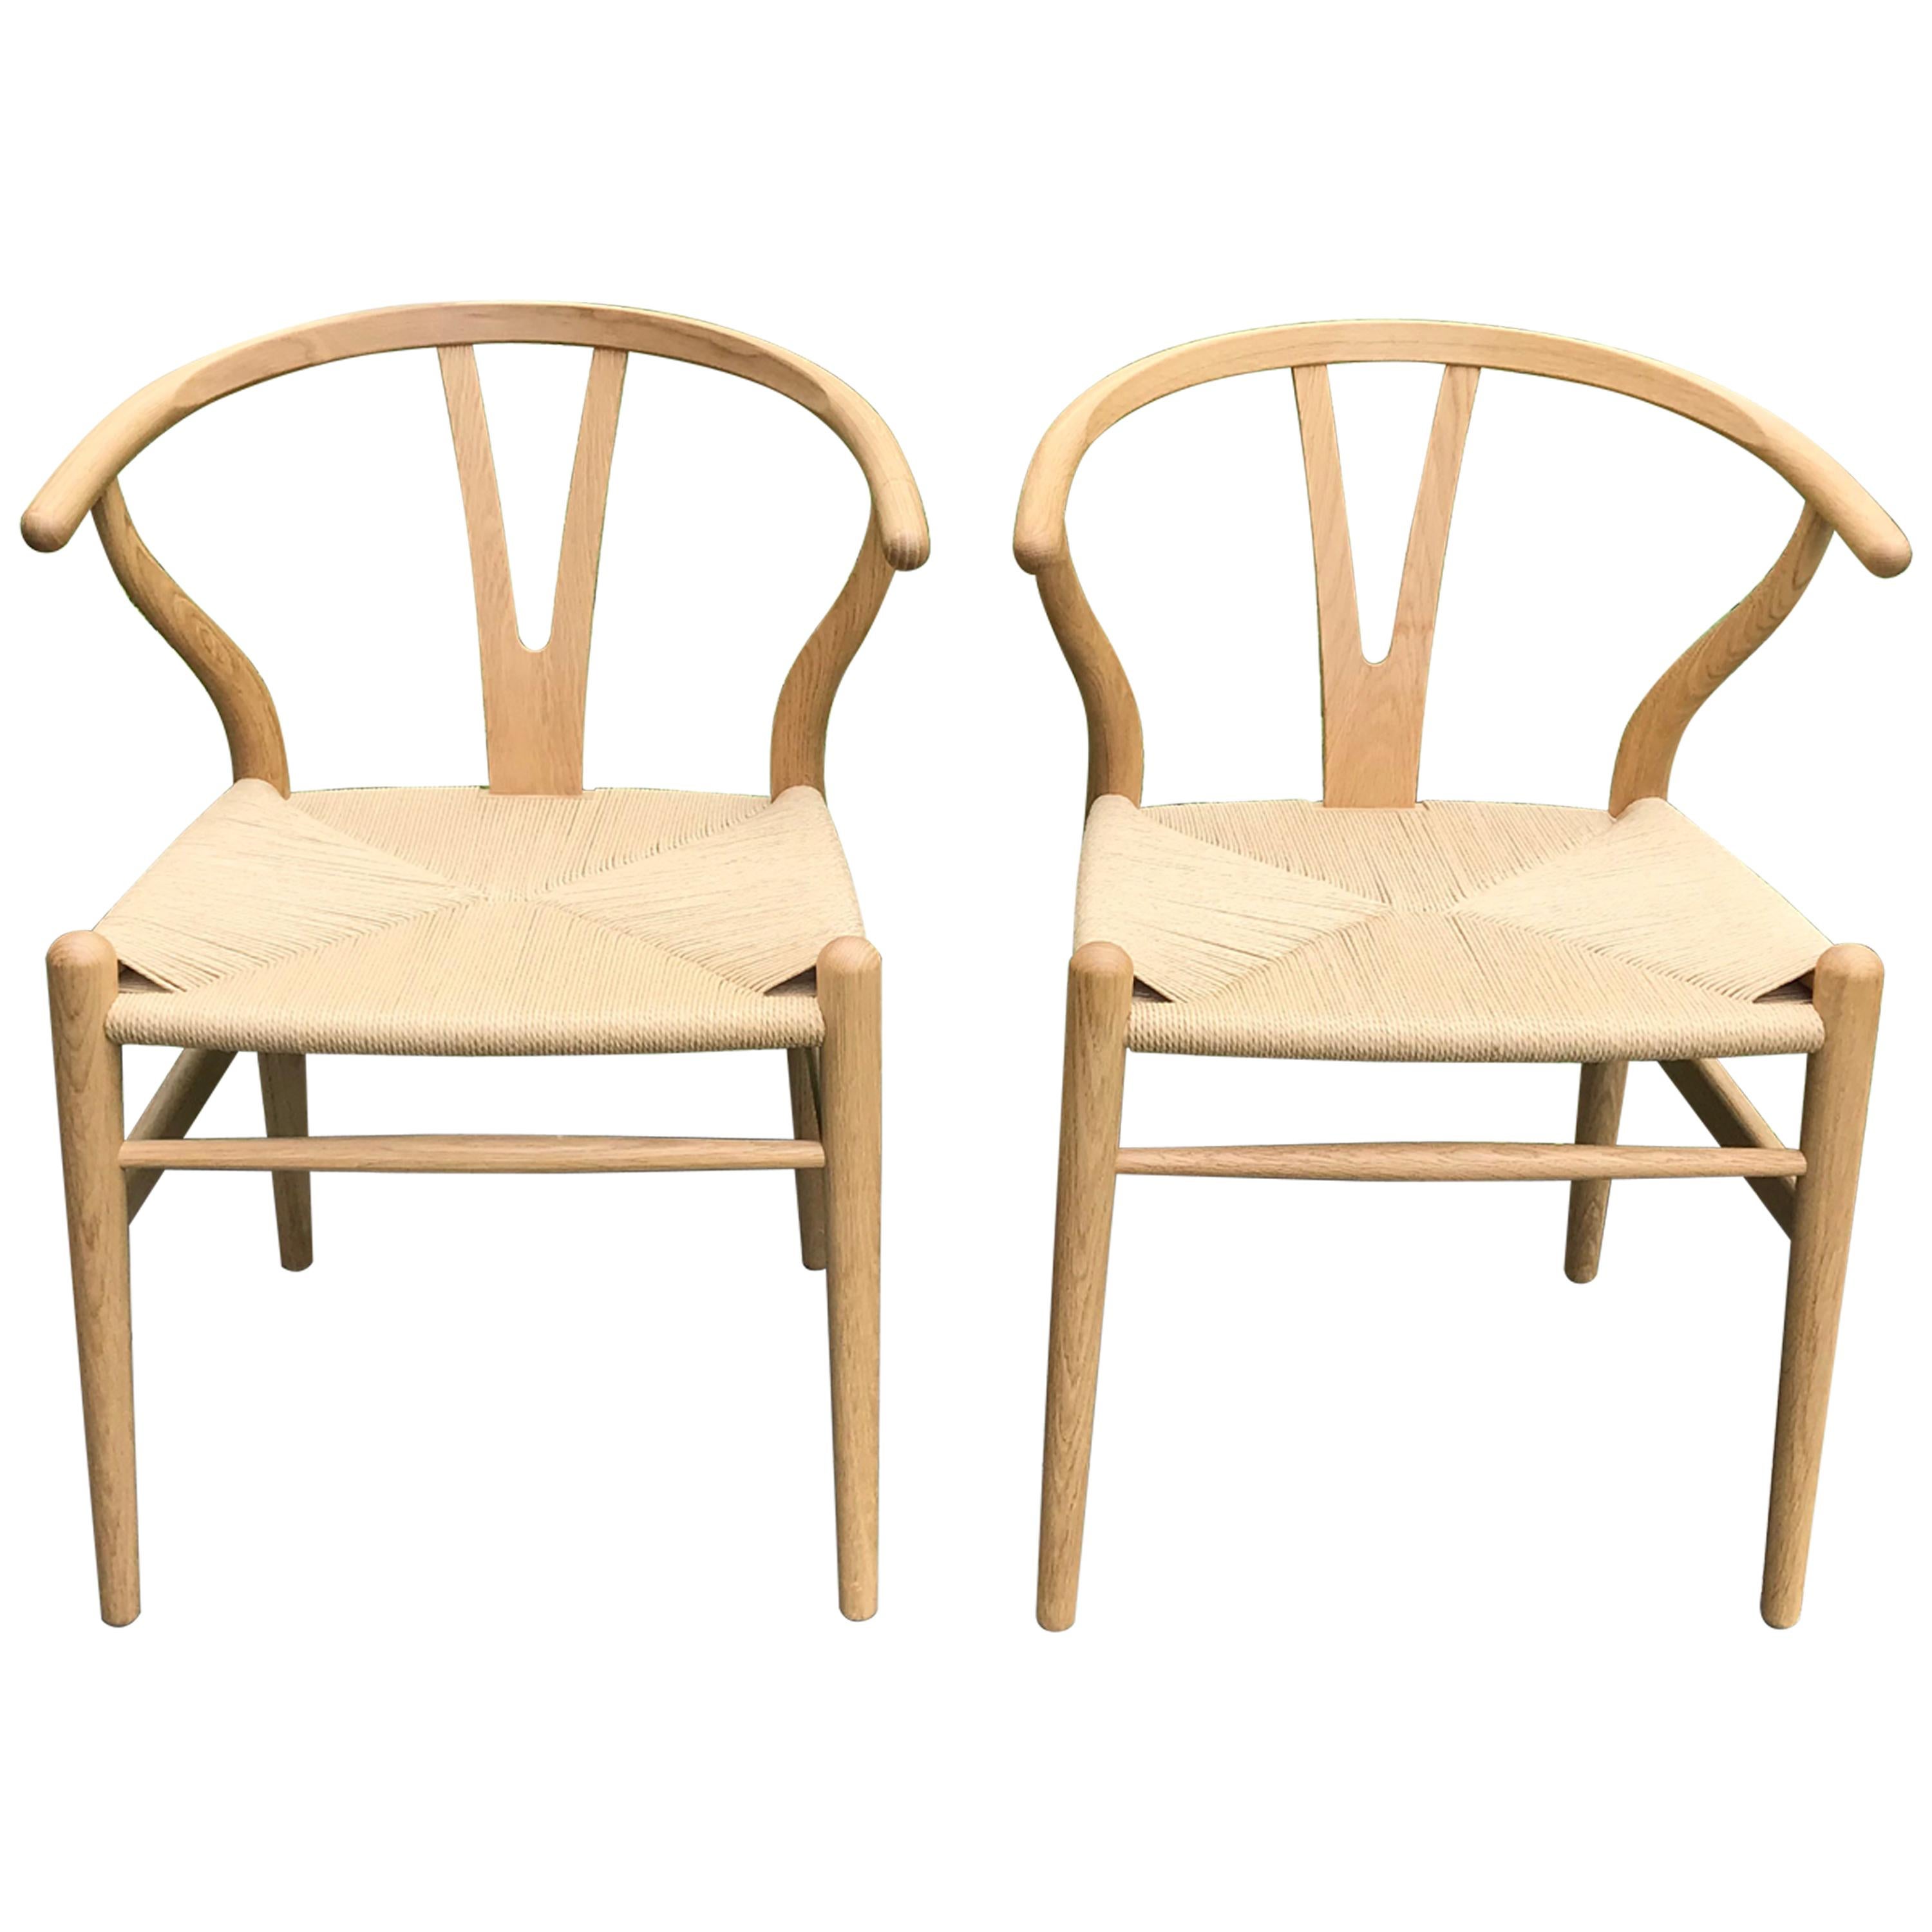 Pair of Hans Wegner for Carl Hansen Wishbone Chairs in Oak with Handwoven Seat